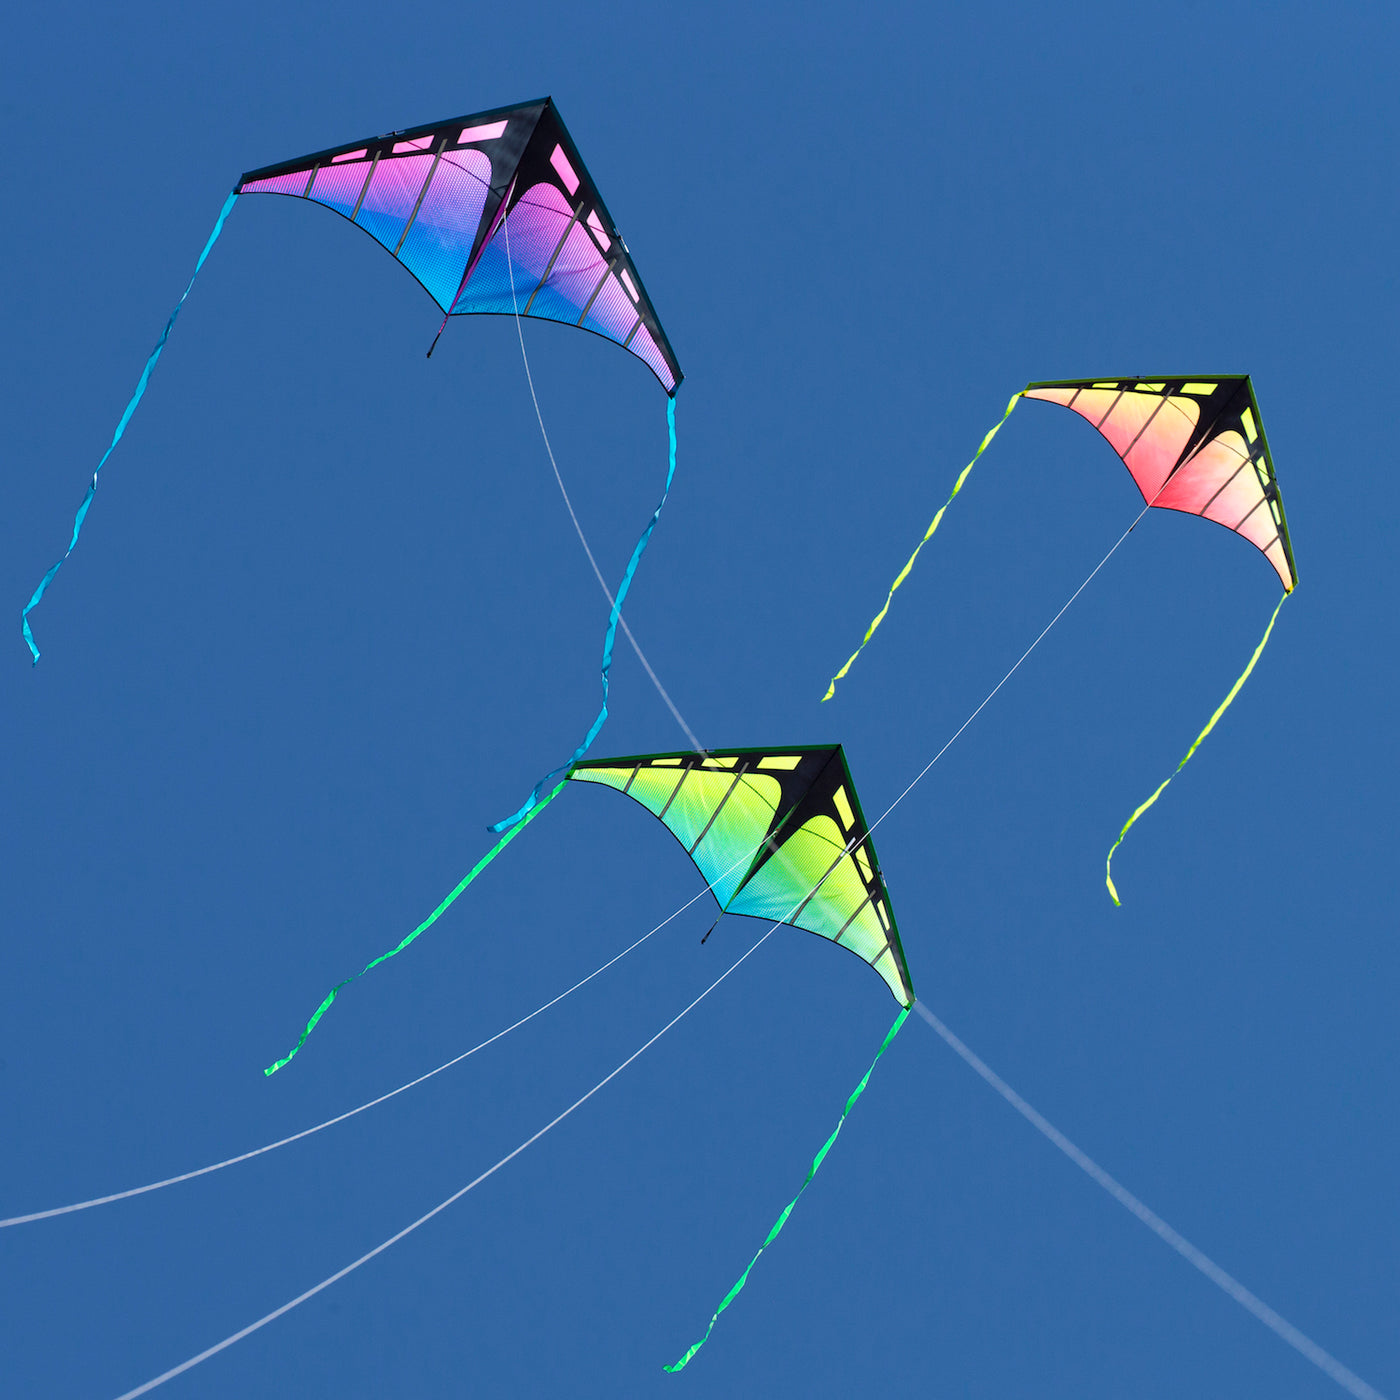 Three Zenith 5 deltas in flight